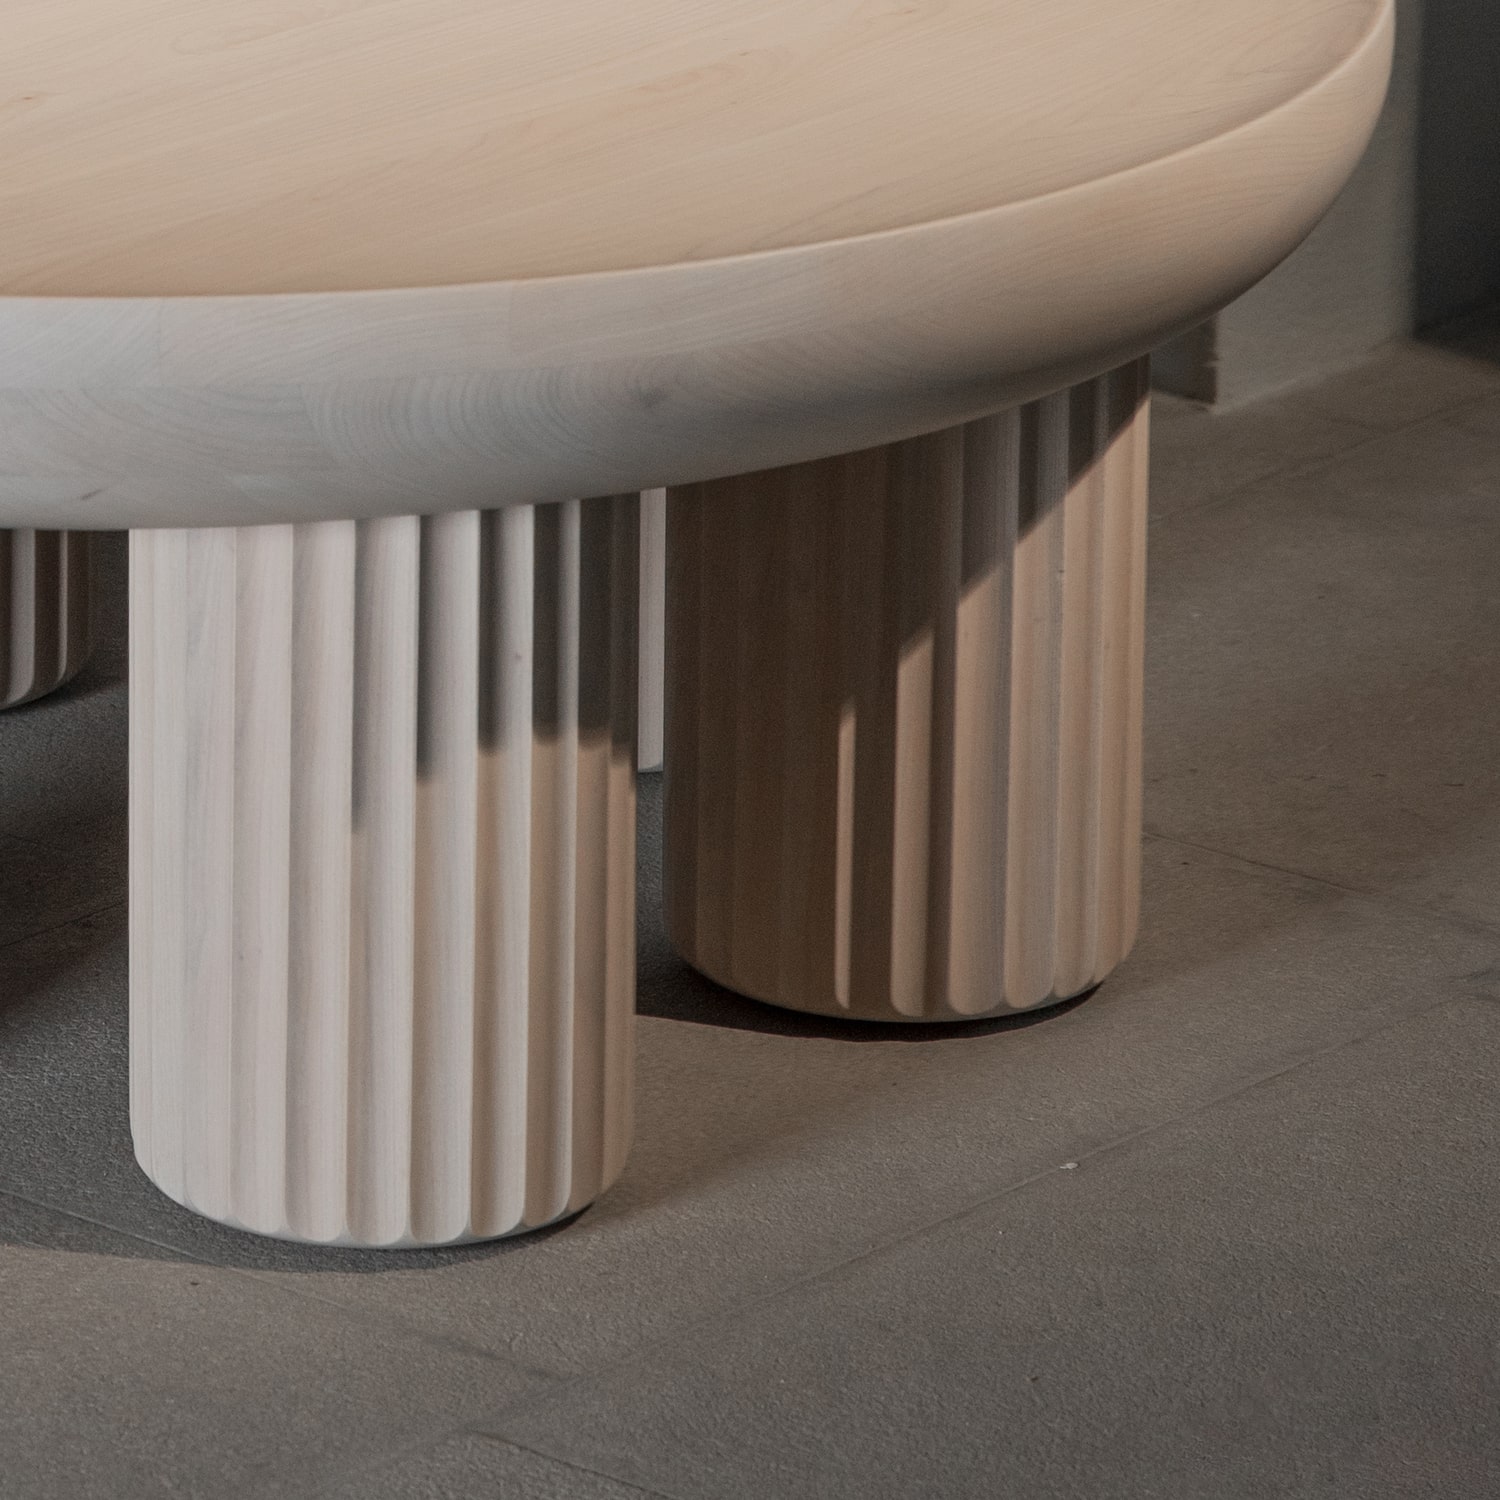 kalokagathos odyssey coffee tables konferencni drevene kovove stoly kolekce eclecticism collection design jiri krejcirik 